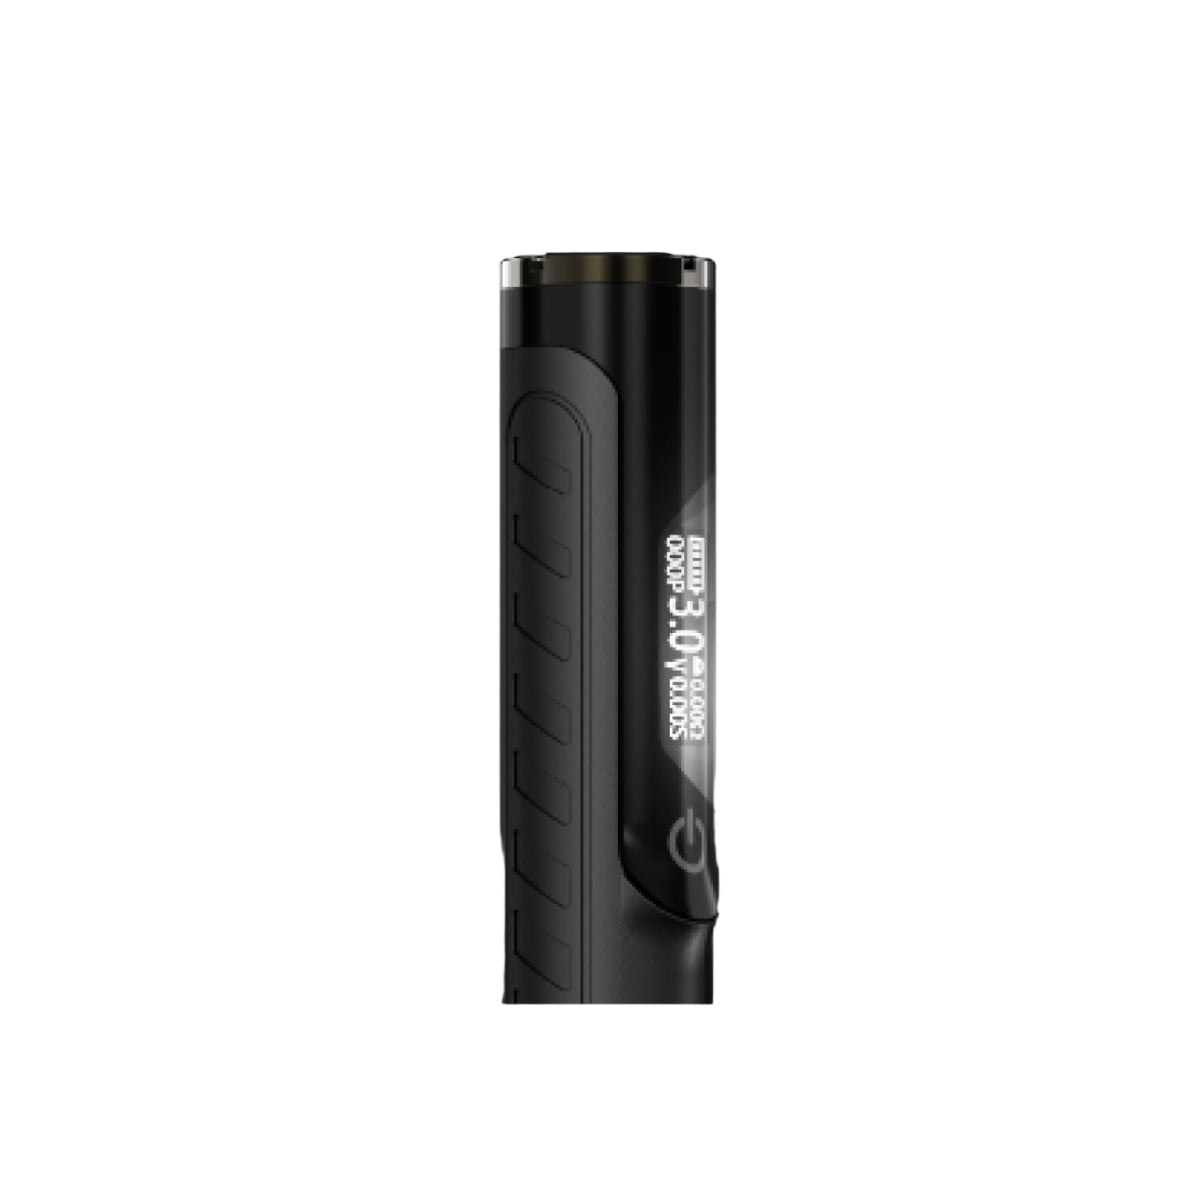 Yocan Black SMART Battery - display